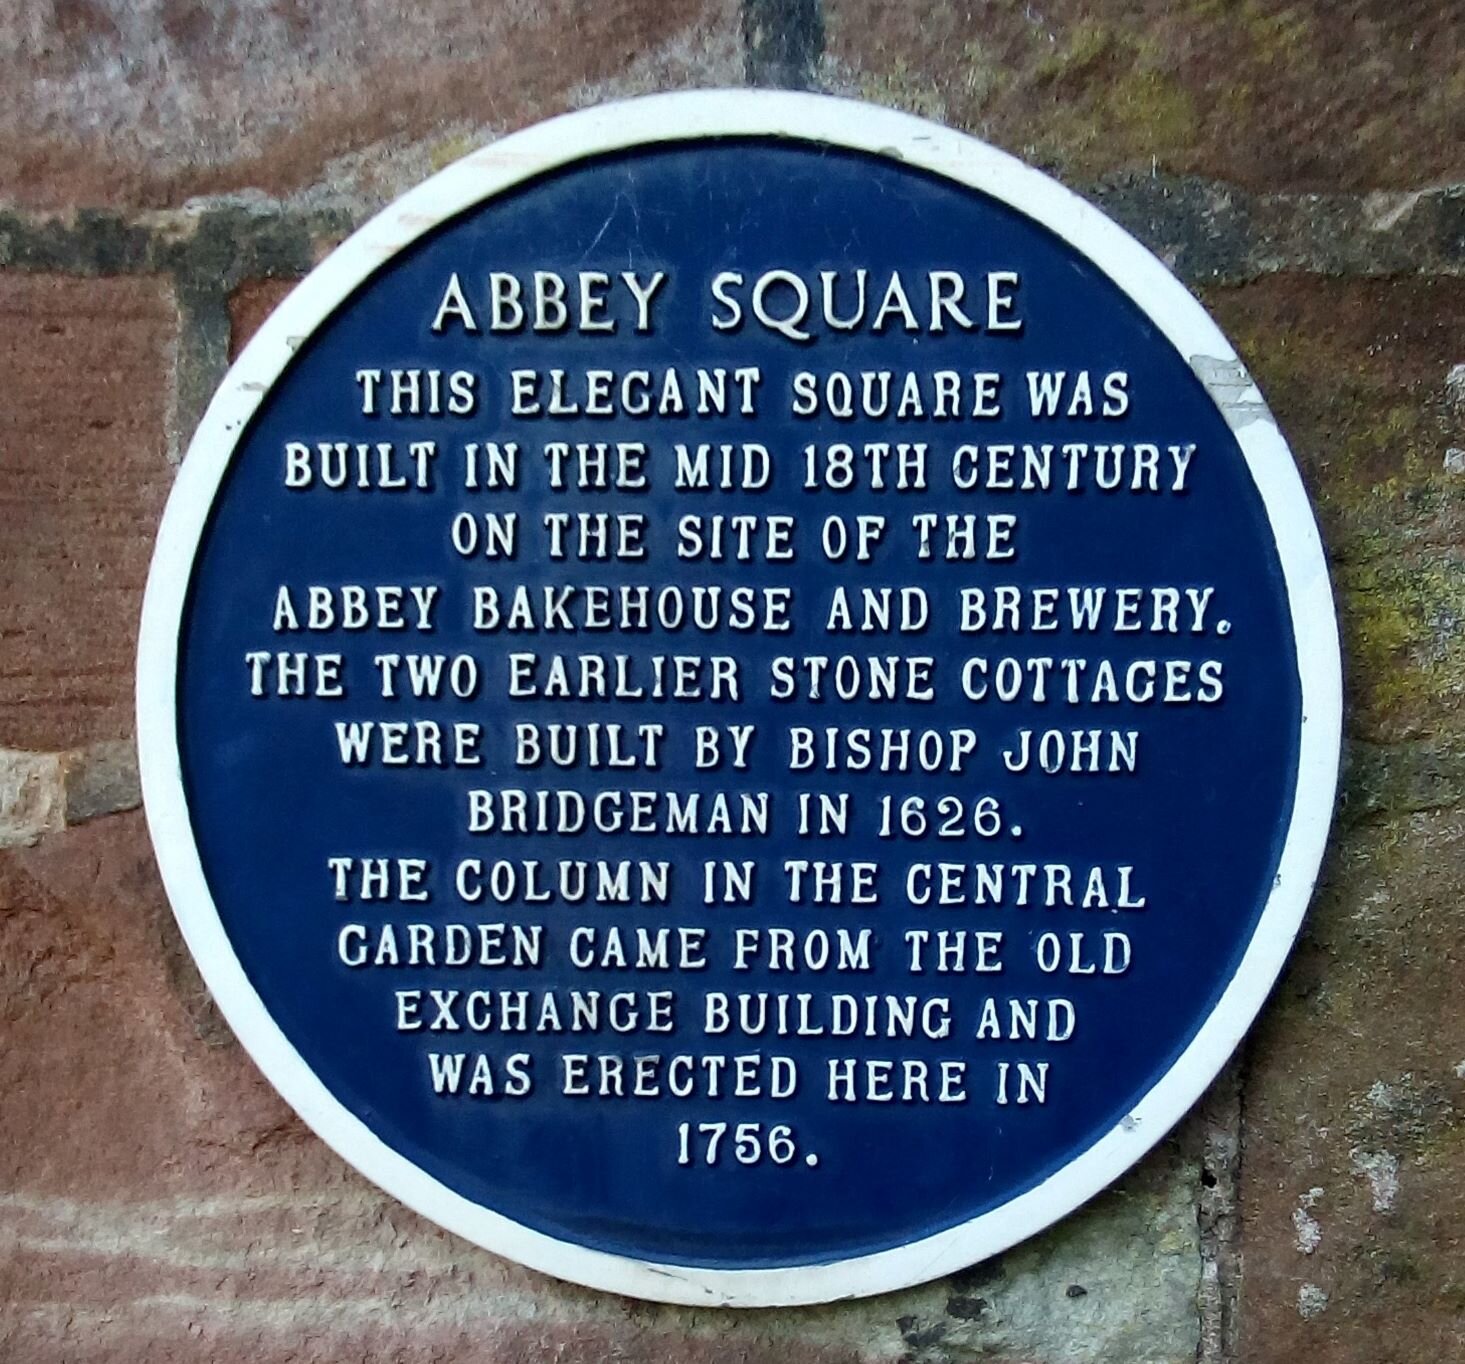 Abbey Sq plaque.jpg